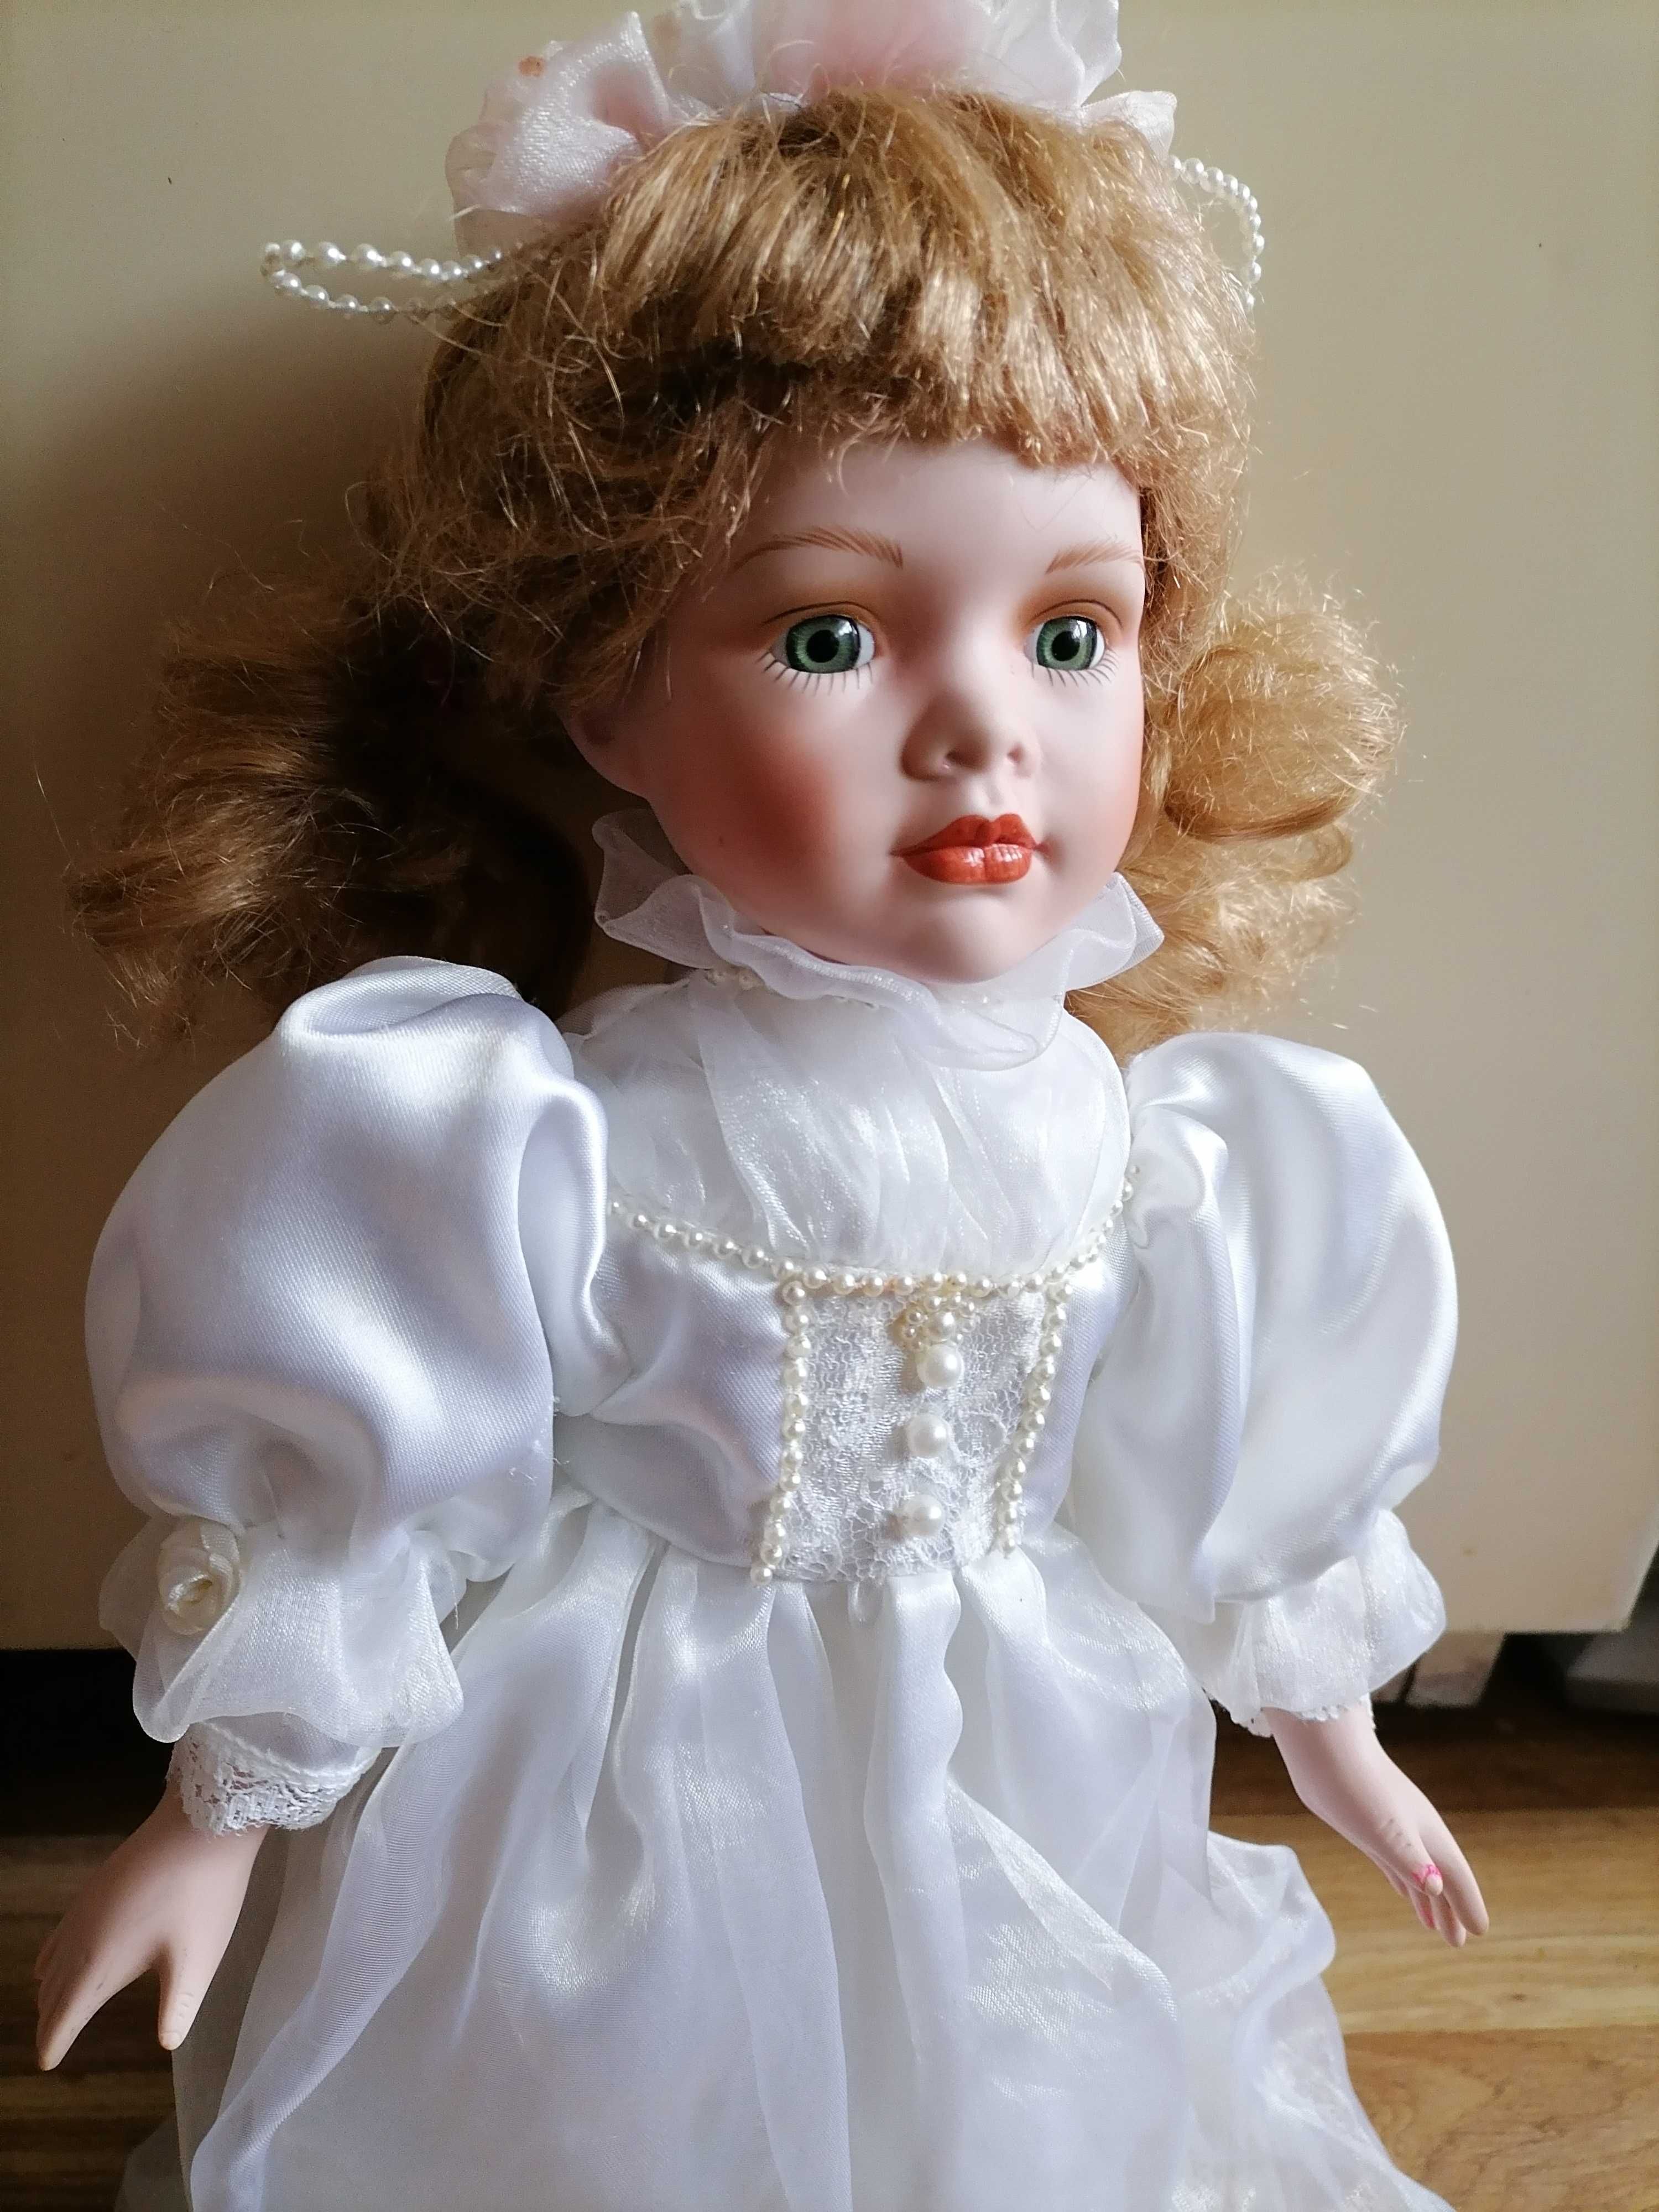 кукла  невеста керамик 45см  антиквариат испания реонардо